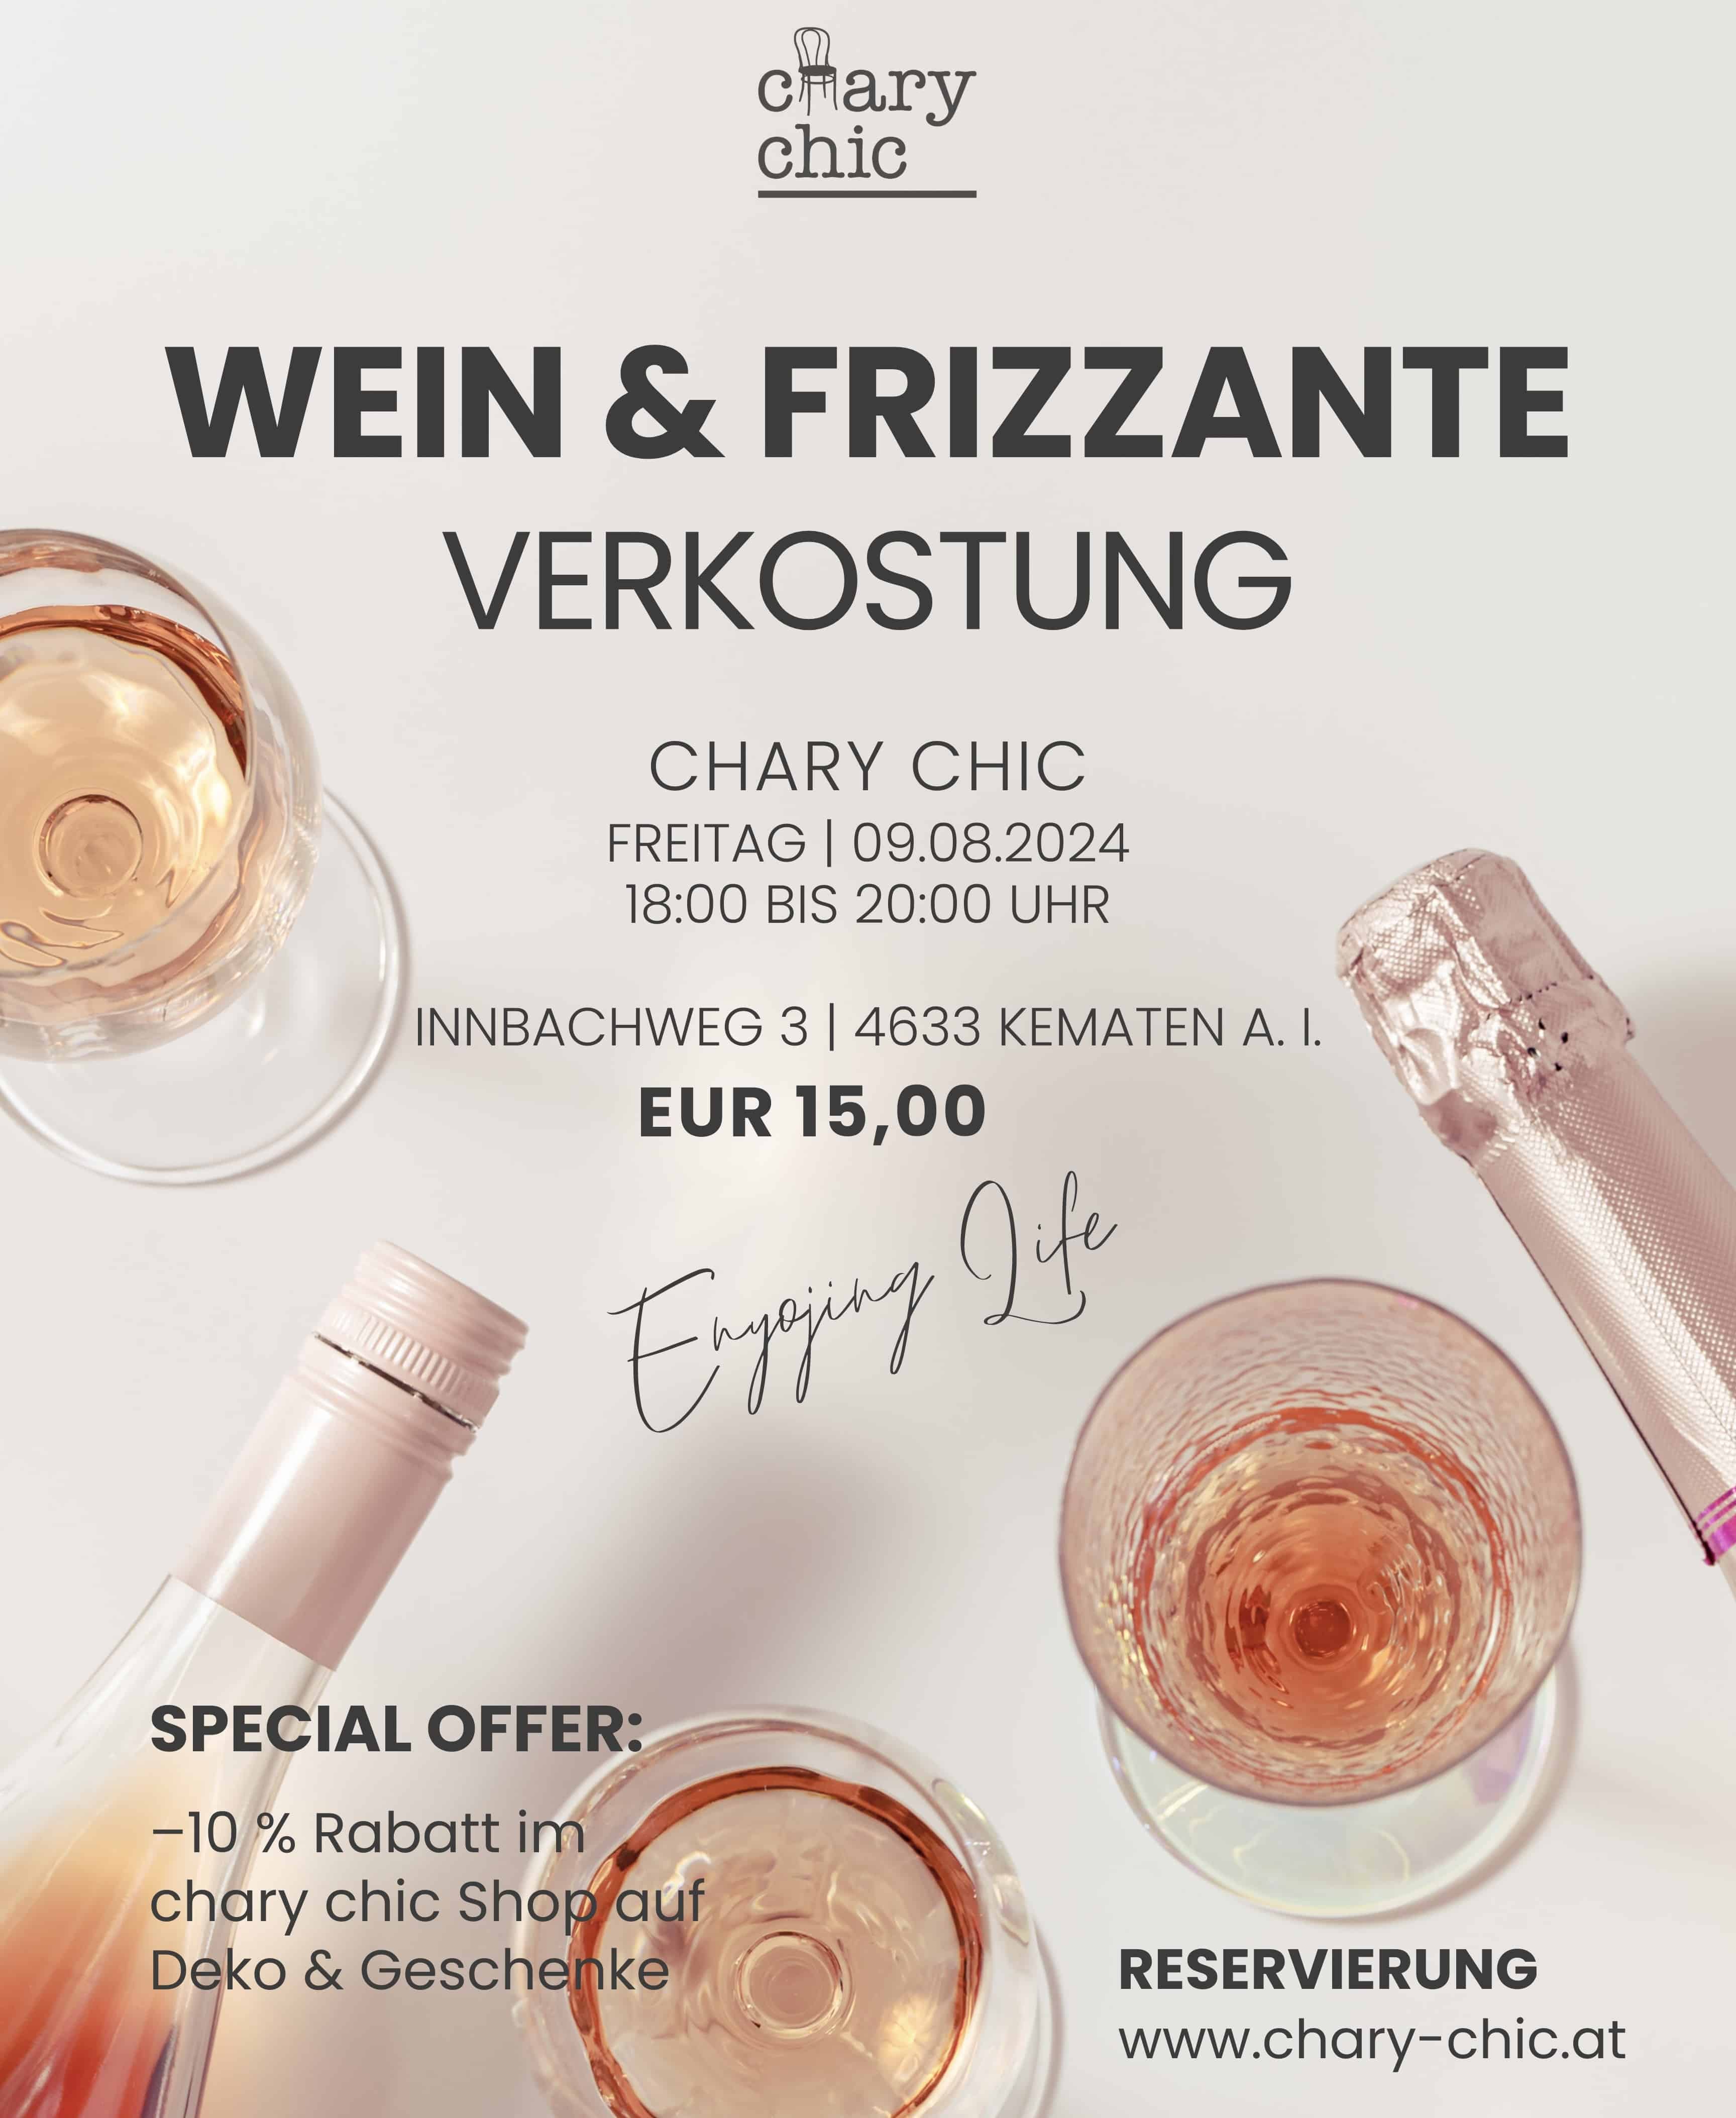 Wein- & Frizzante Verkostung bei chary chic